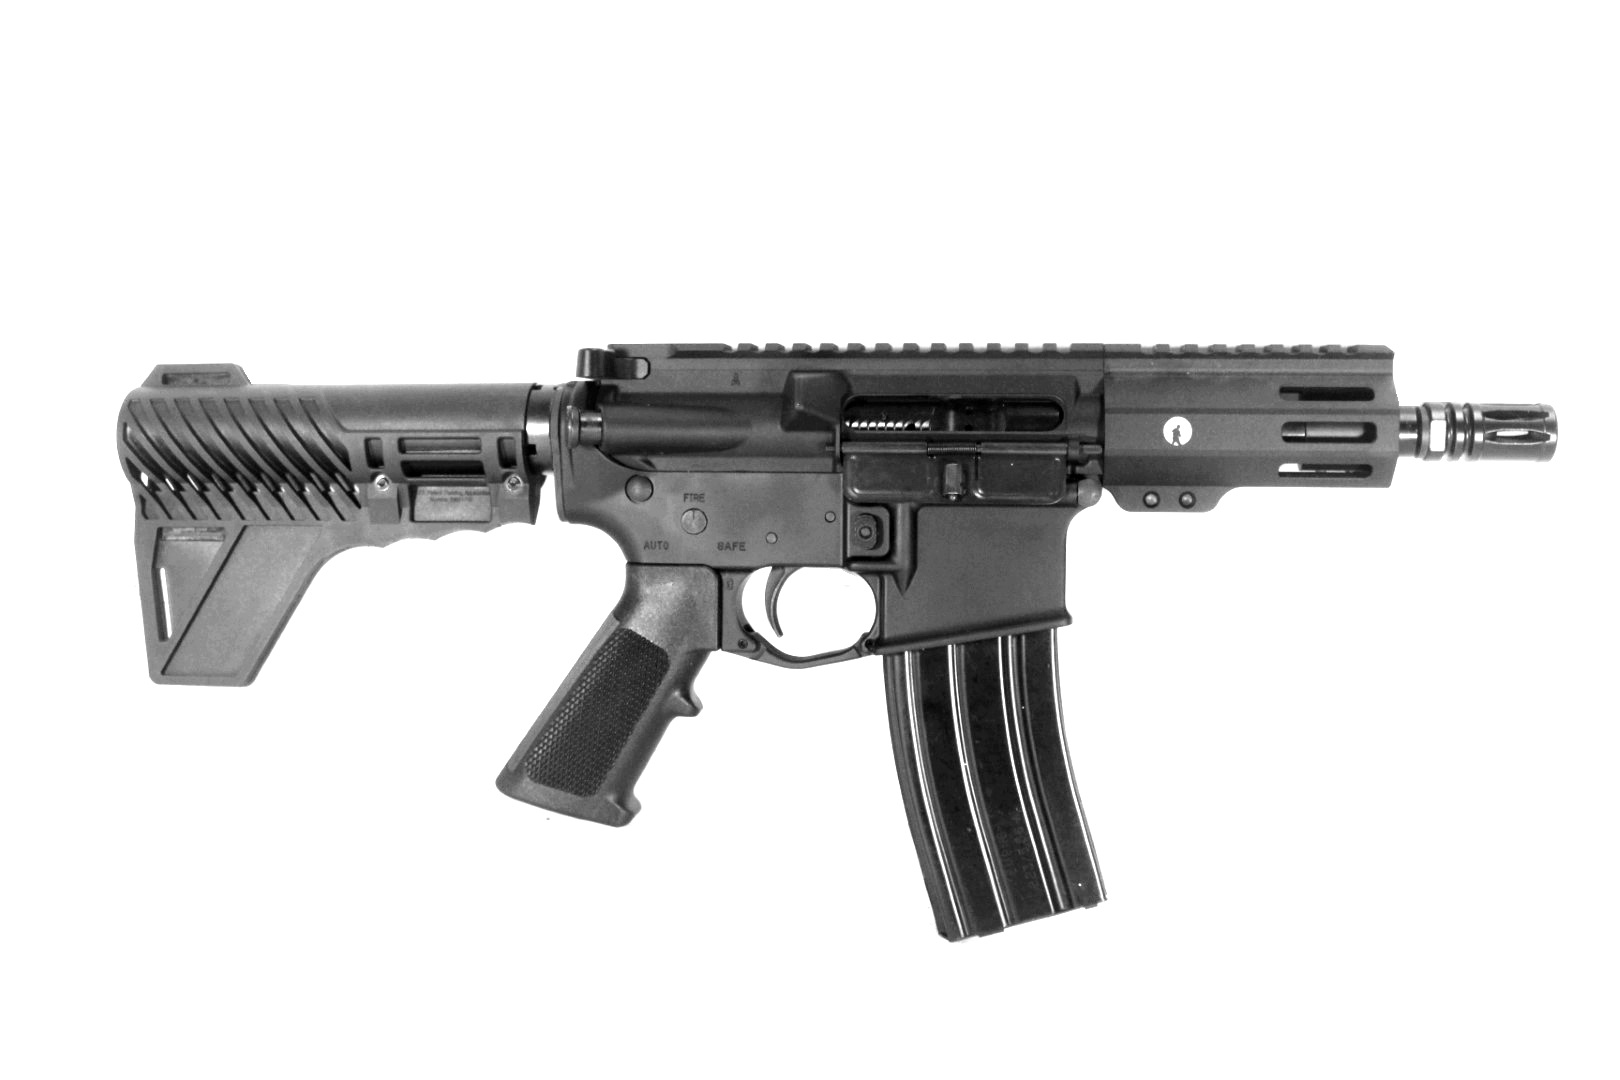 5 inch 300 BLACKOUT AR15 Pistol | Suppressor Ready | USA MADE